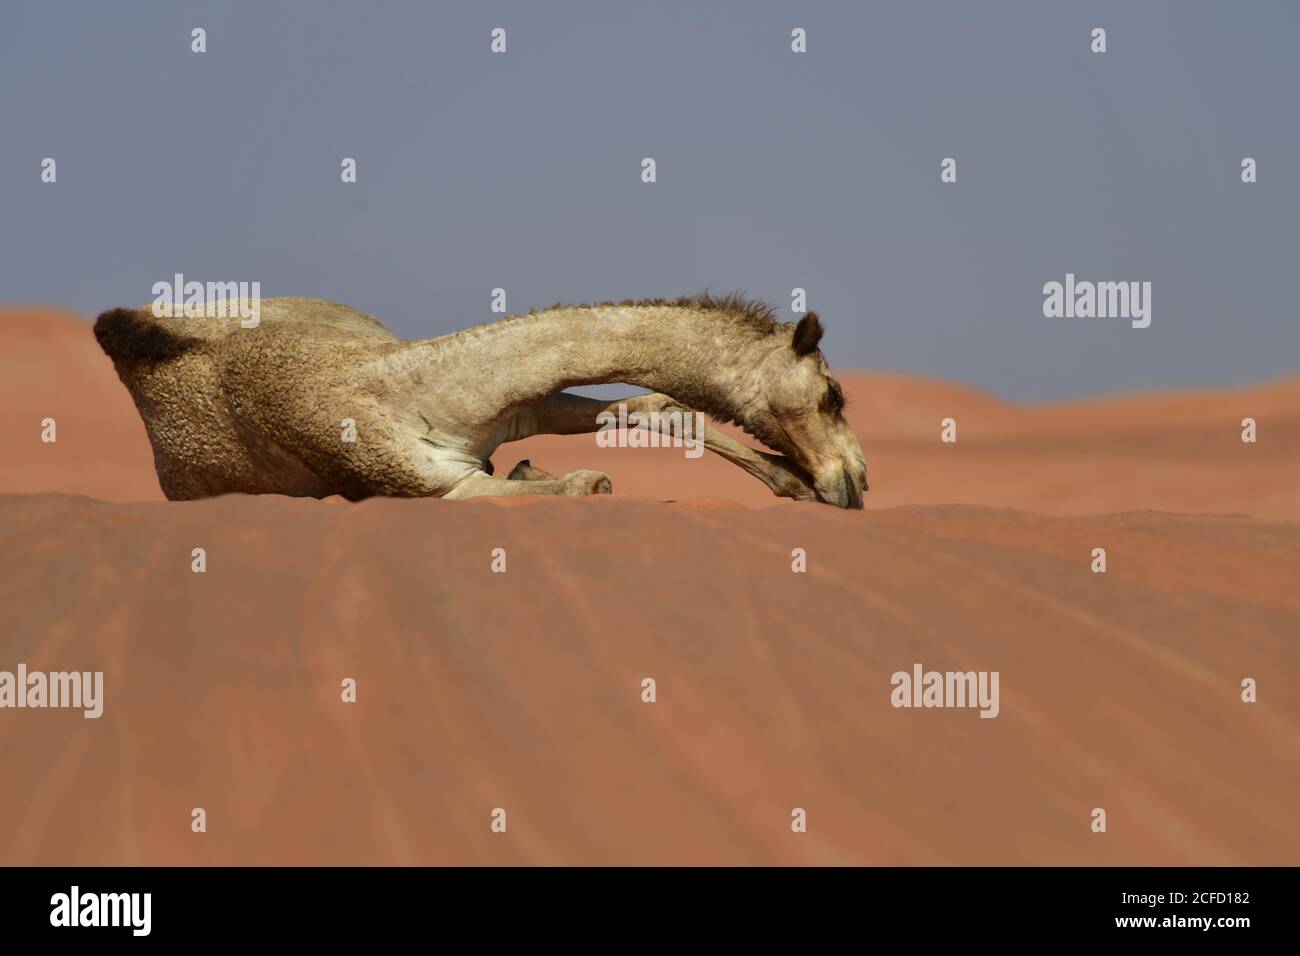 Arabian Camel (dromedary) resting & exhibiting their capabilities of surviving in the harsh desert landscapes of the Arabian Peninsula landscape. Stock Photo